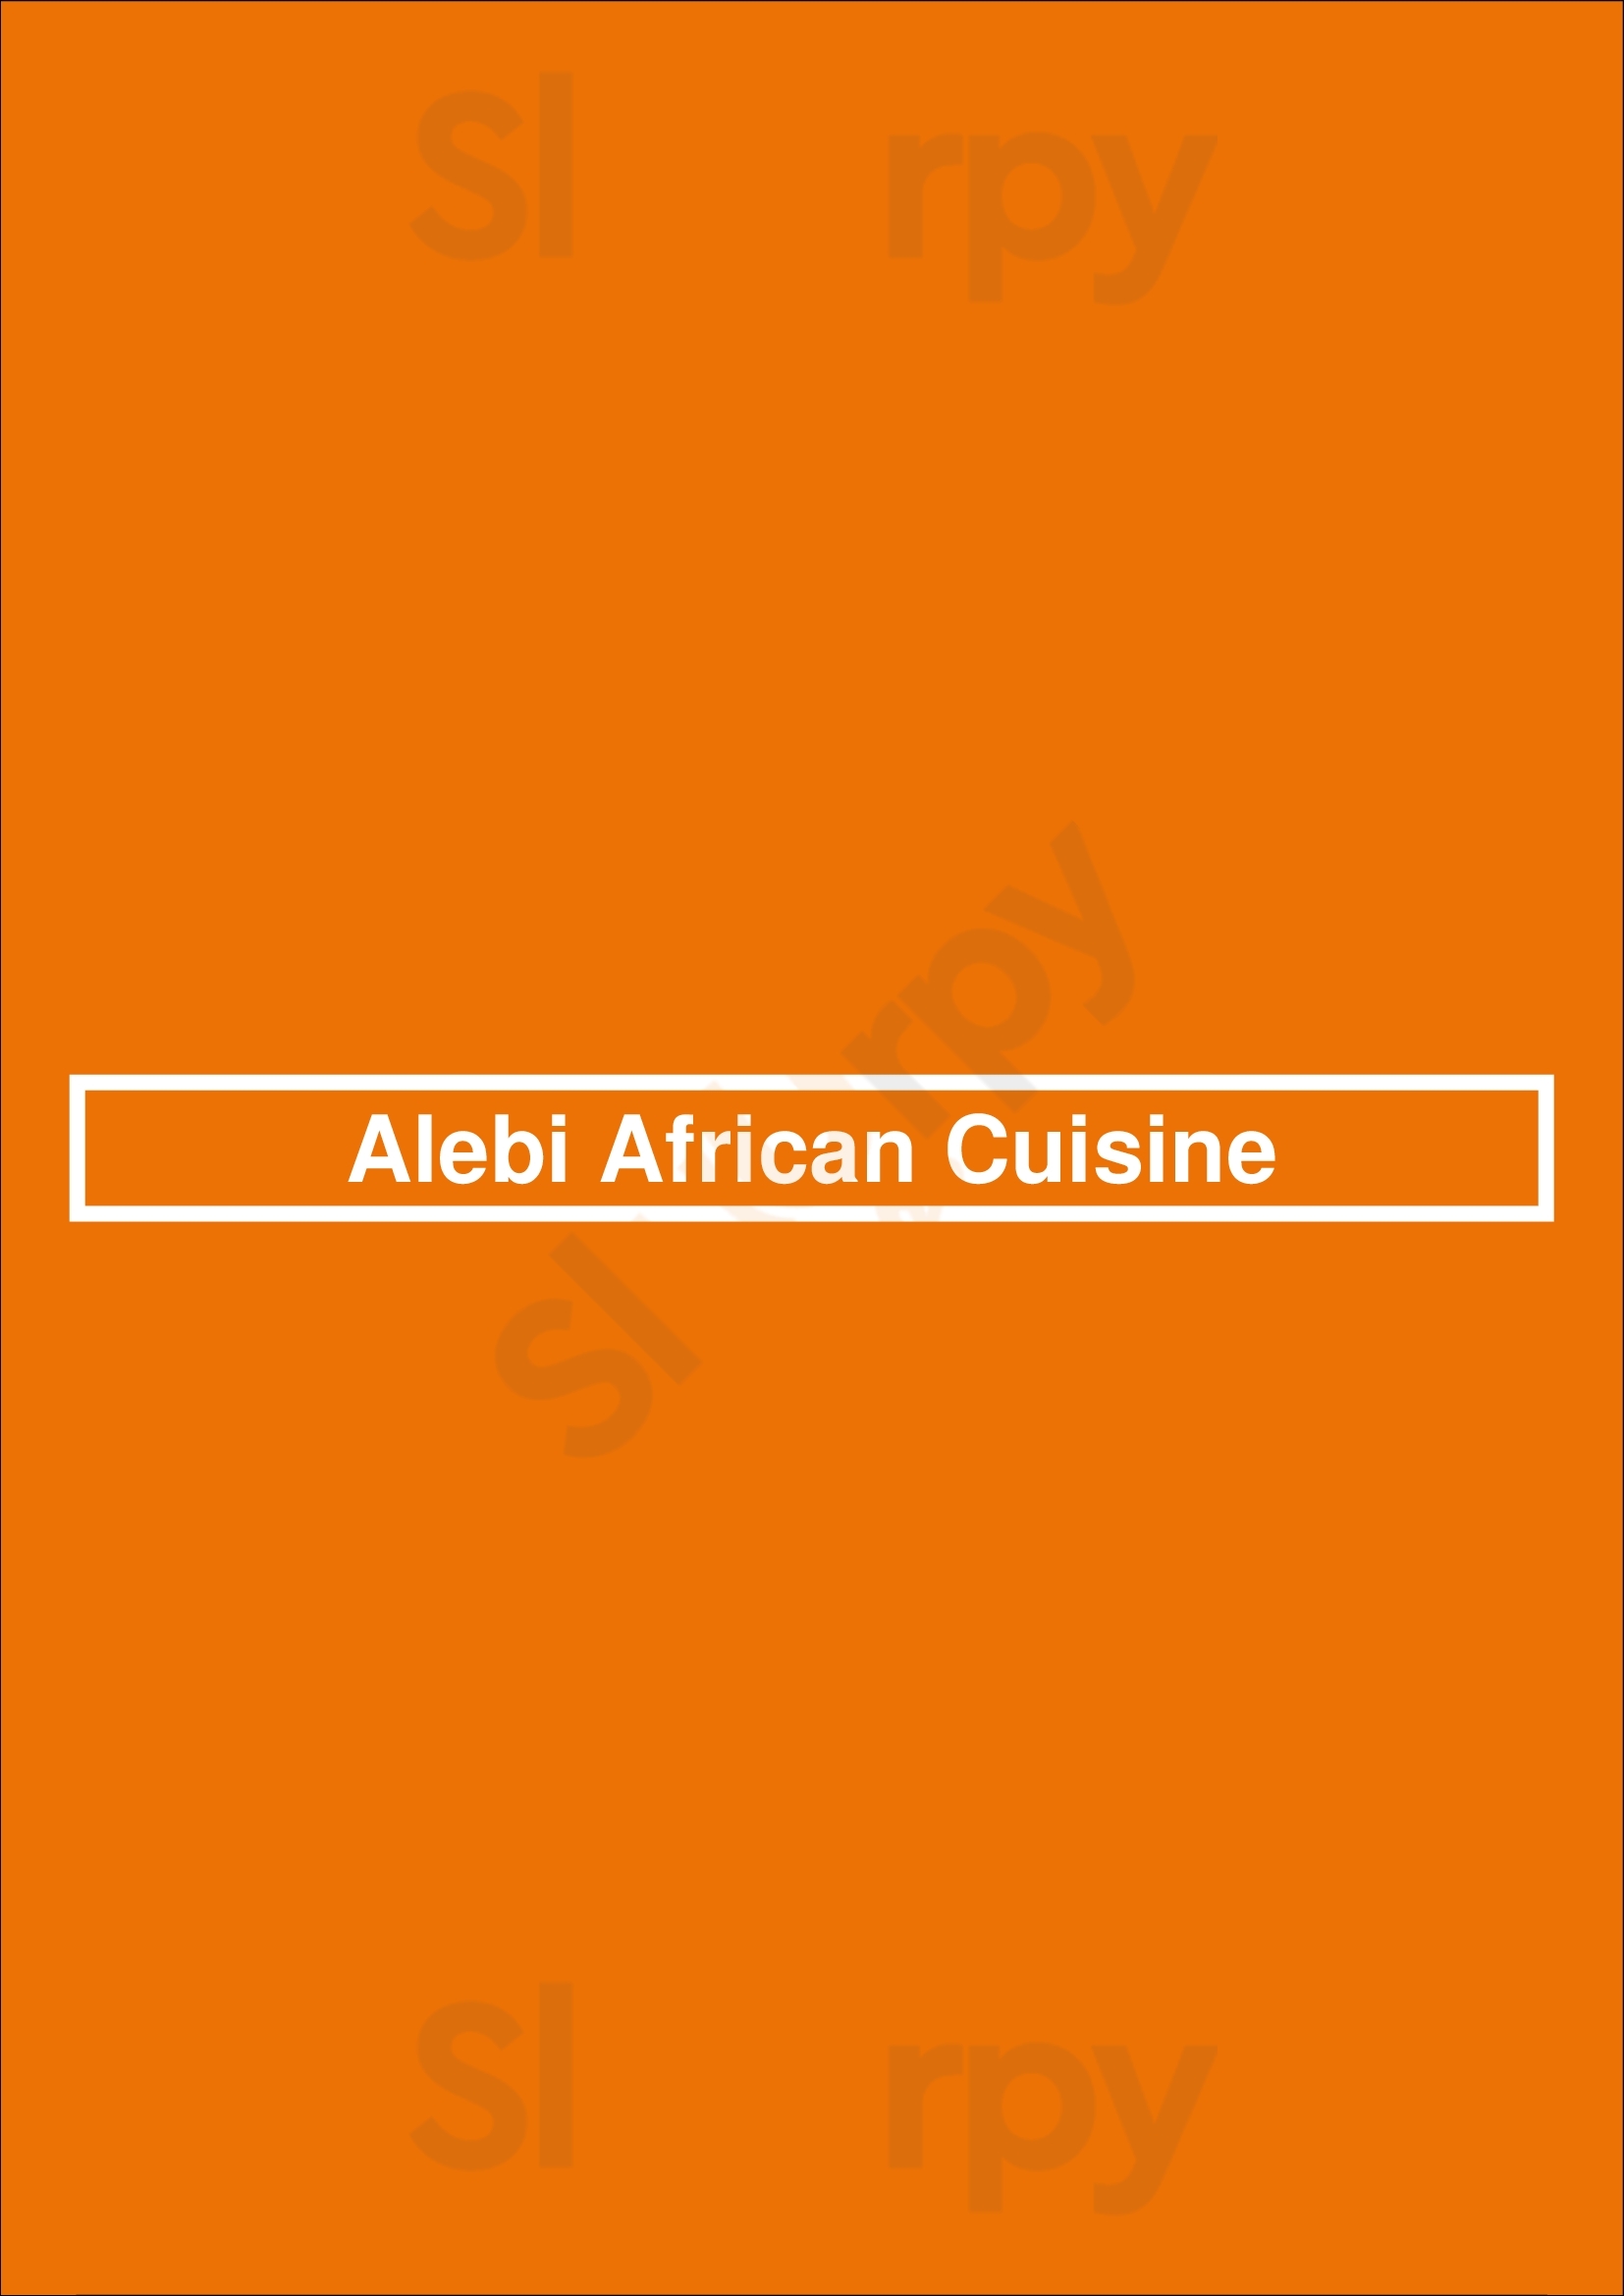 Alebi African Cuisine Surrey Menu - 1